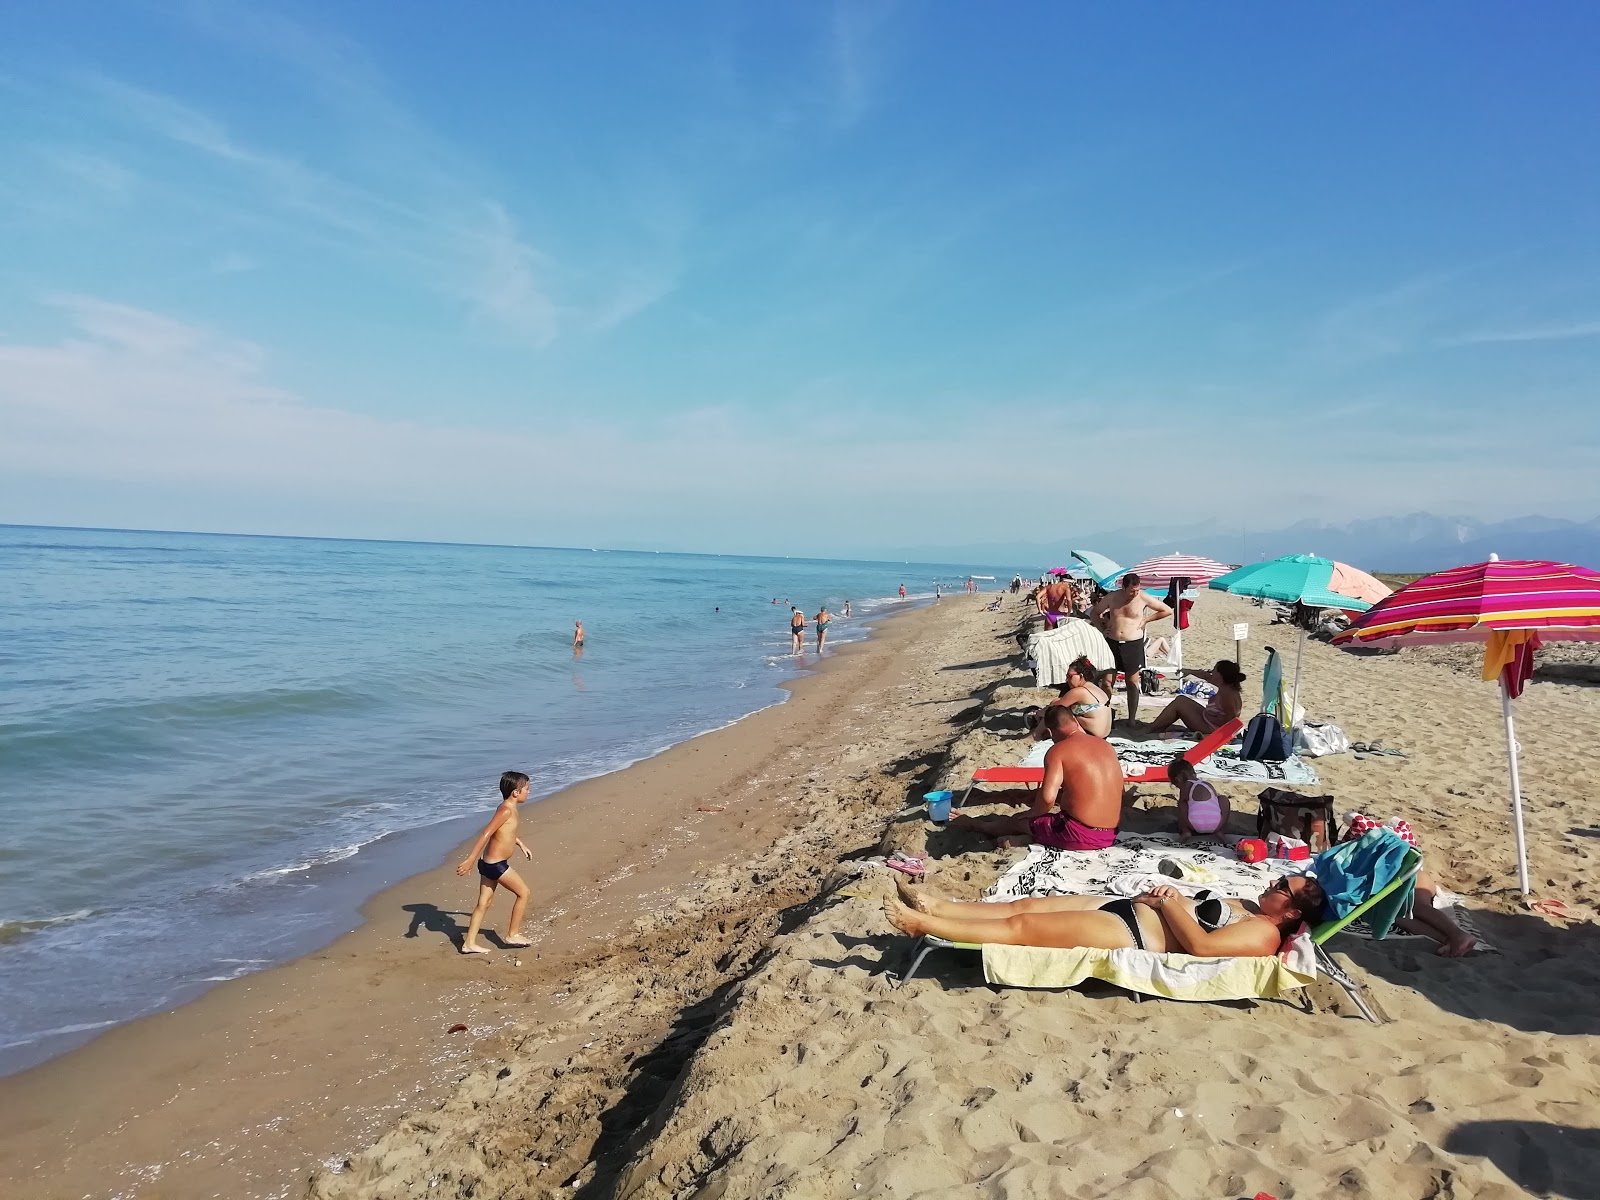 Foto de Spiaggia di Vecchiano - lugar popular entre os apreciadores de relaxamento